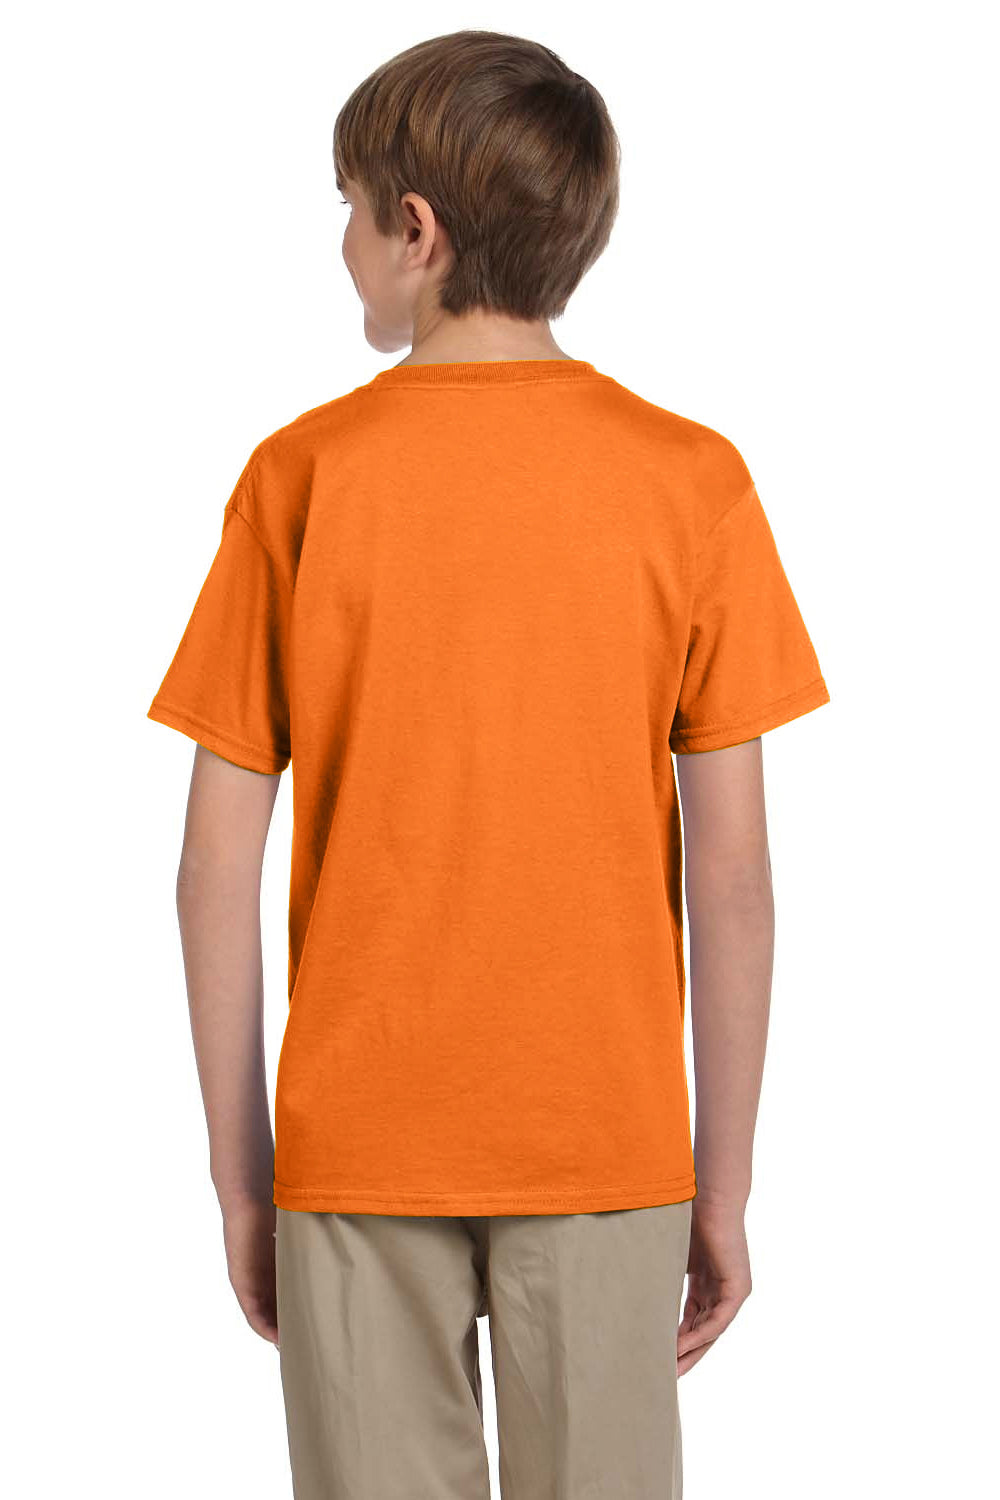 Fruit Of The Loom 3931B Youth HD Jersey Short Sleeve Crewneck T-Shirt Safety Orange Back